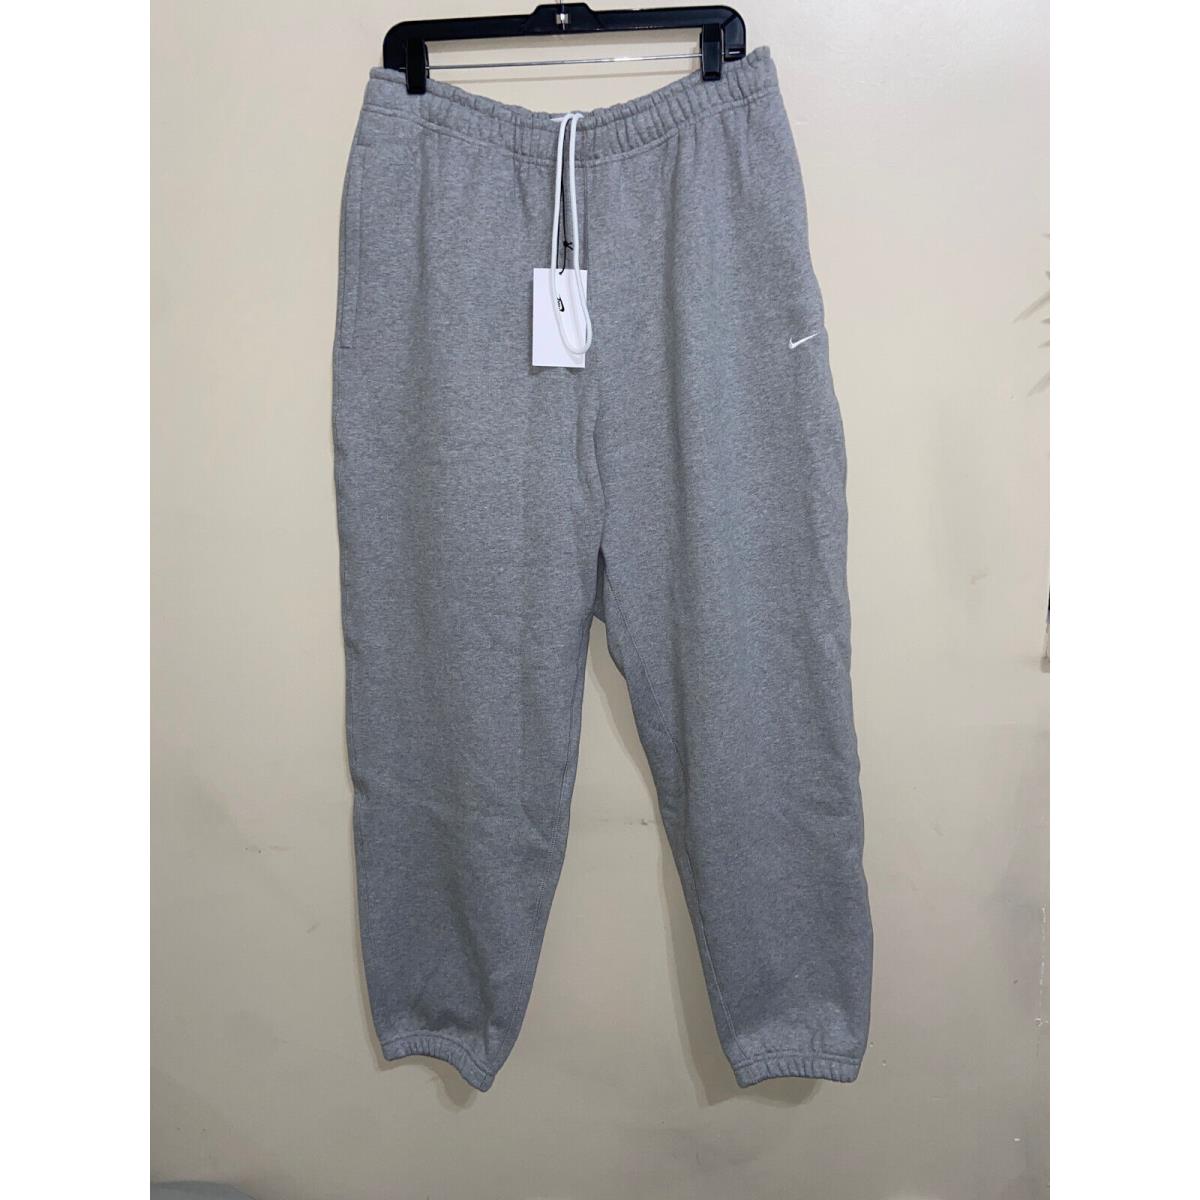 Nike Nikelab Nrg Heavyweight Solo Fleece Pants Mens Size L Grey CW5460-063